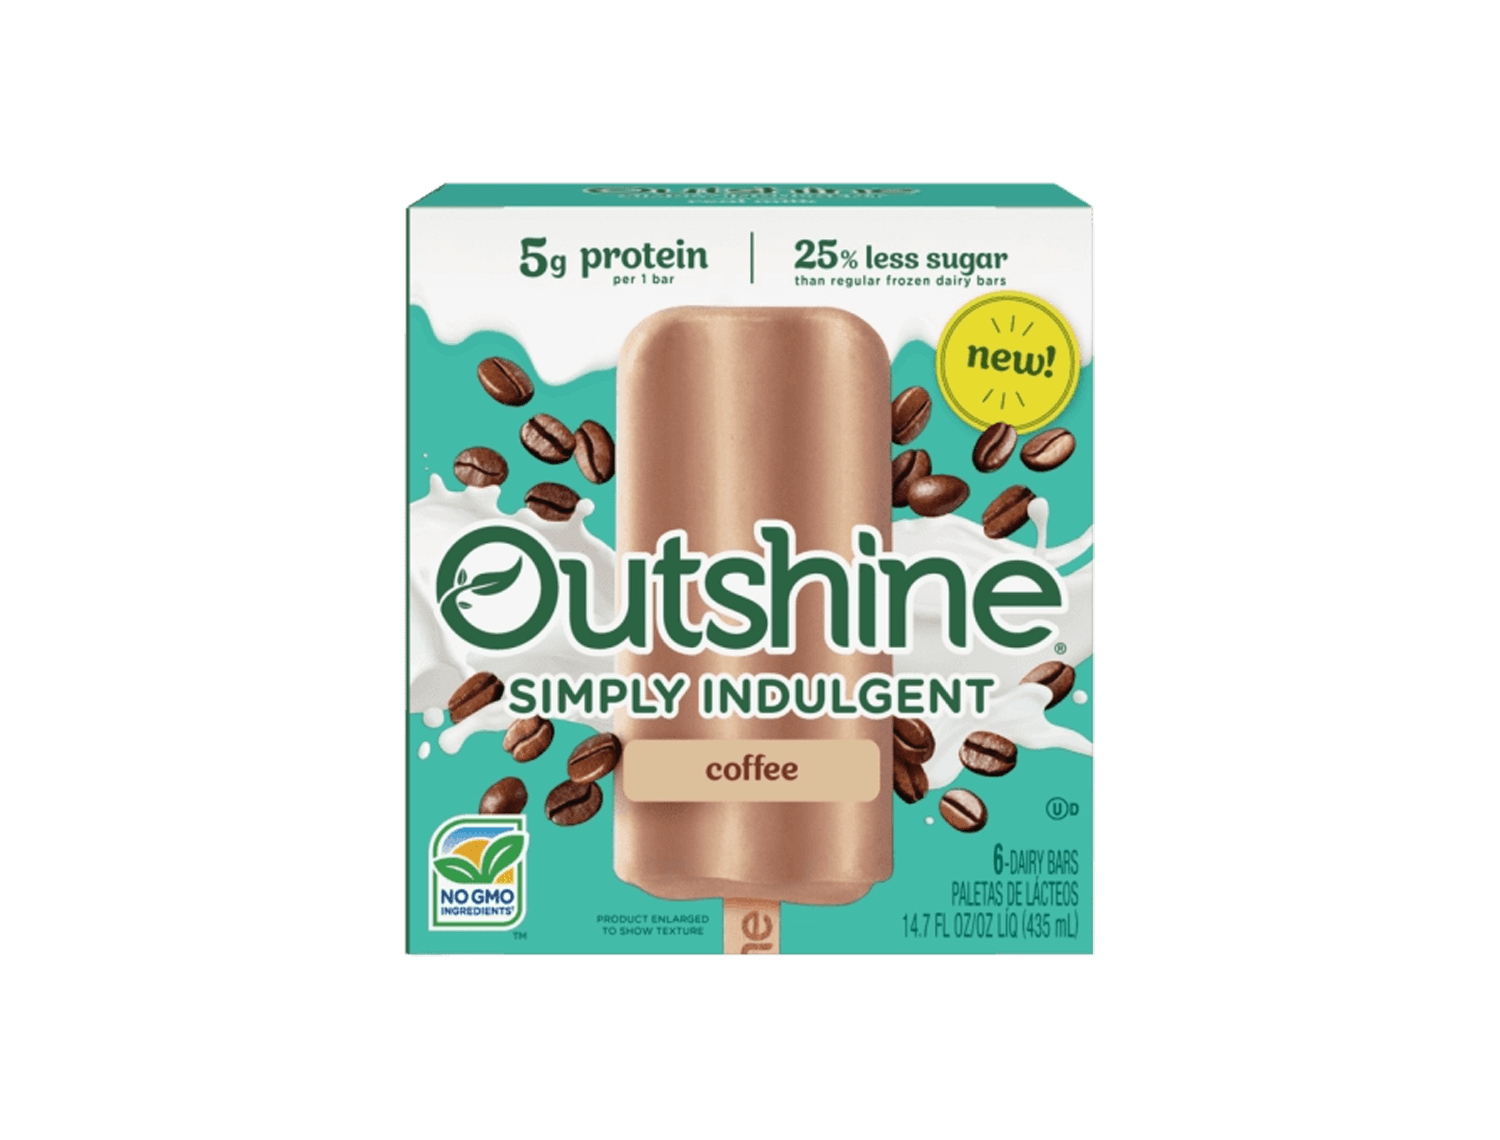 box of Outshine simply indulgent coffee bars